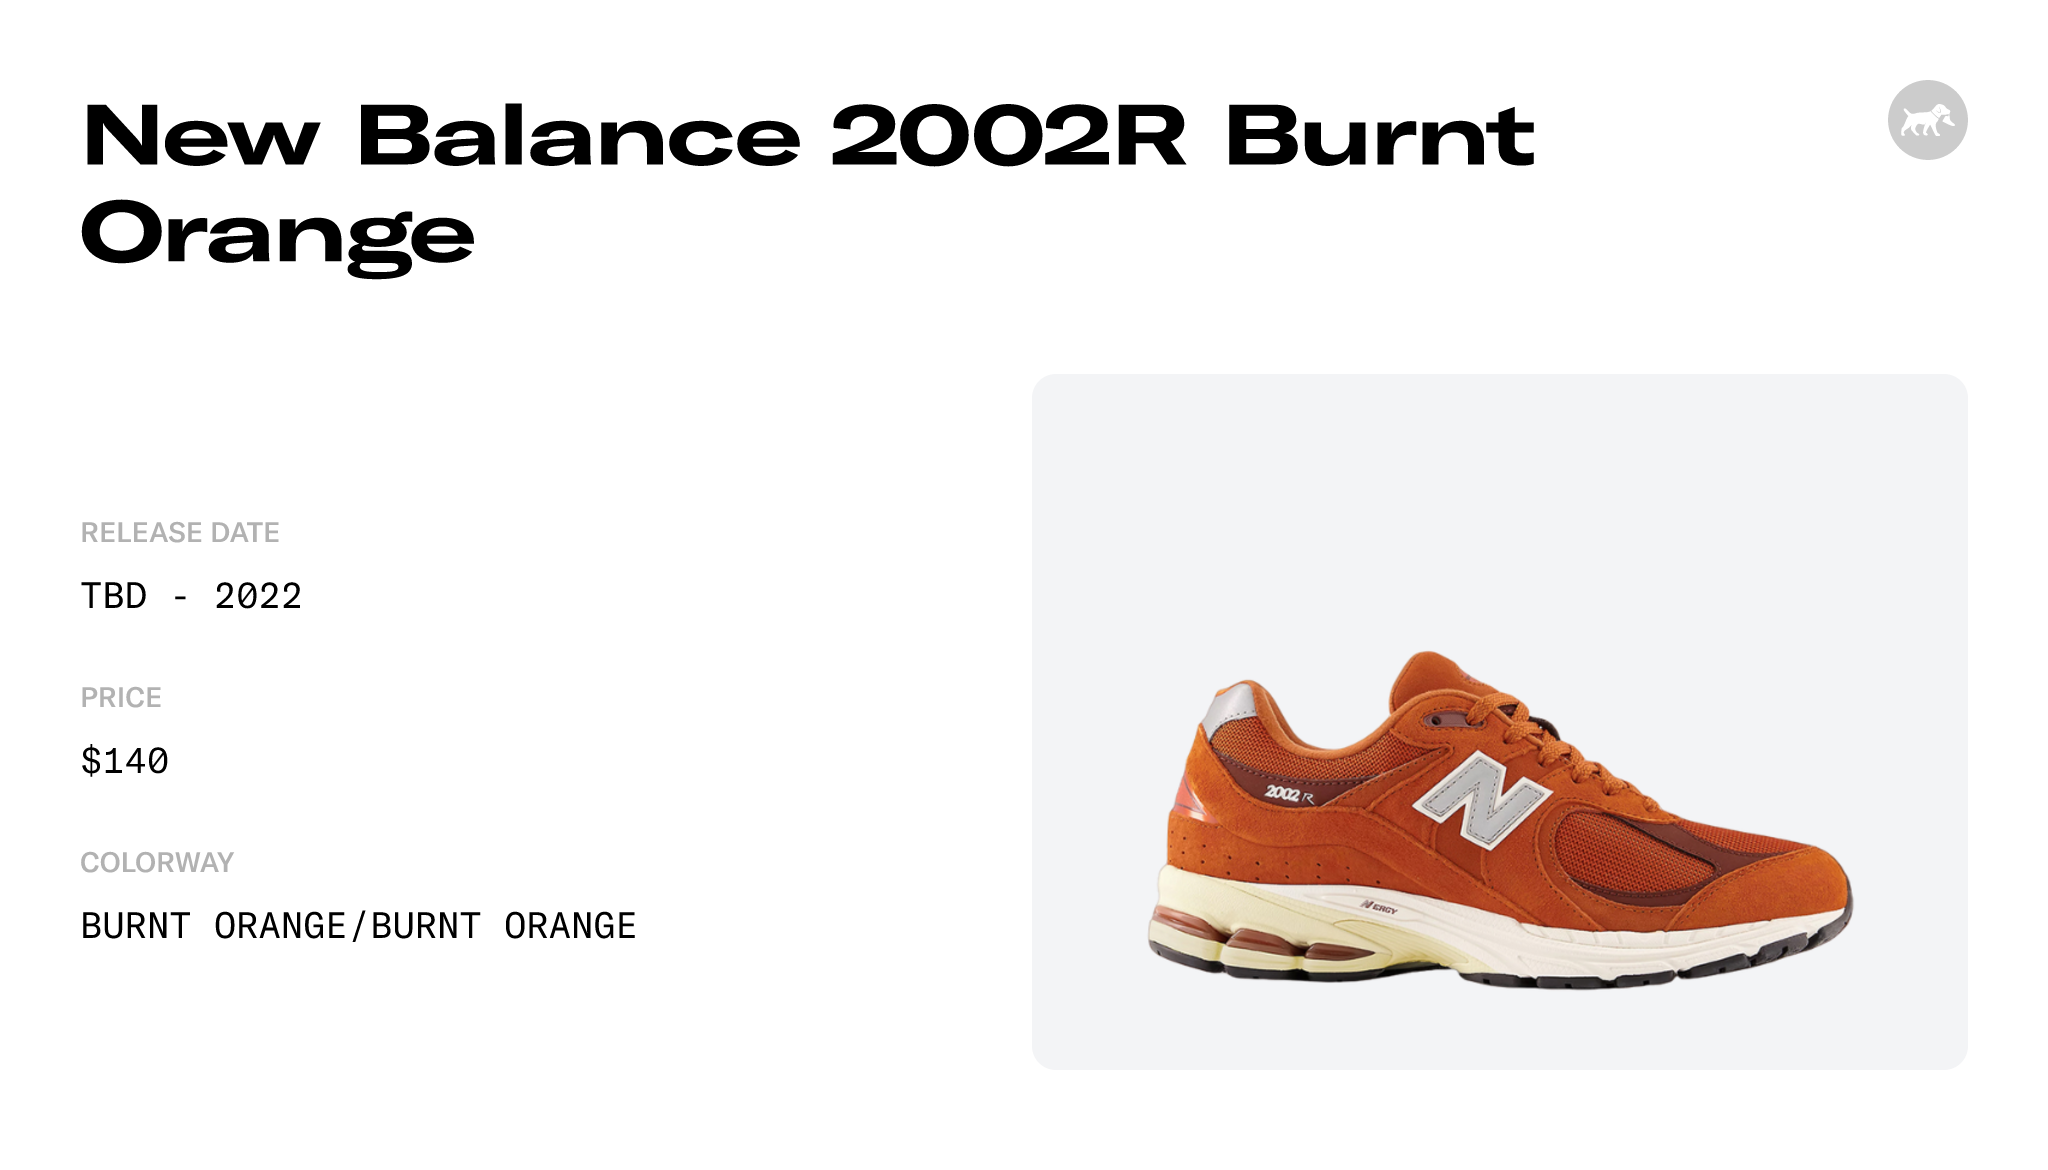 New Balance 2002R Burnt Orange - M2002RCB Raffles and Release Date